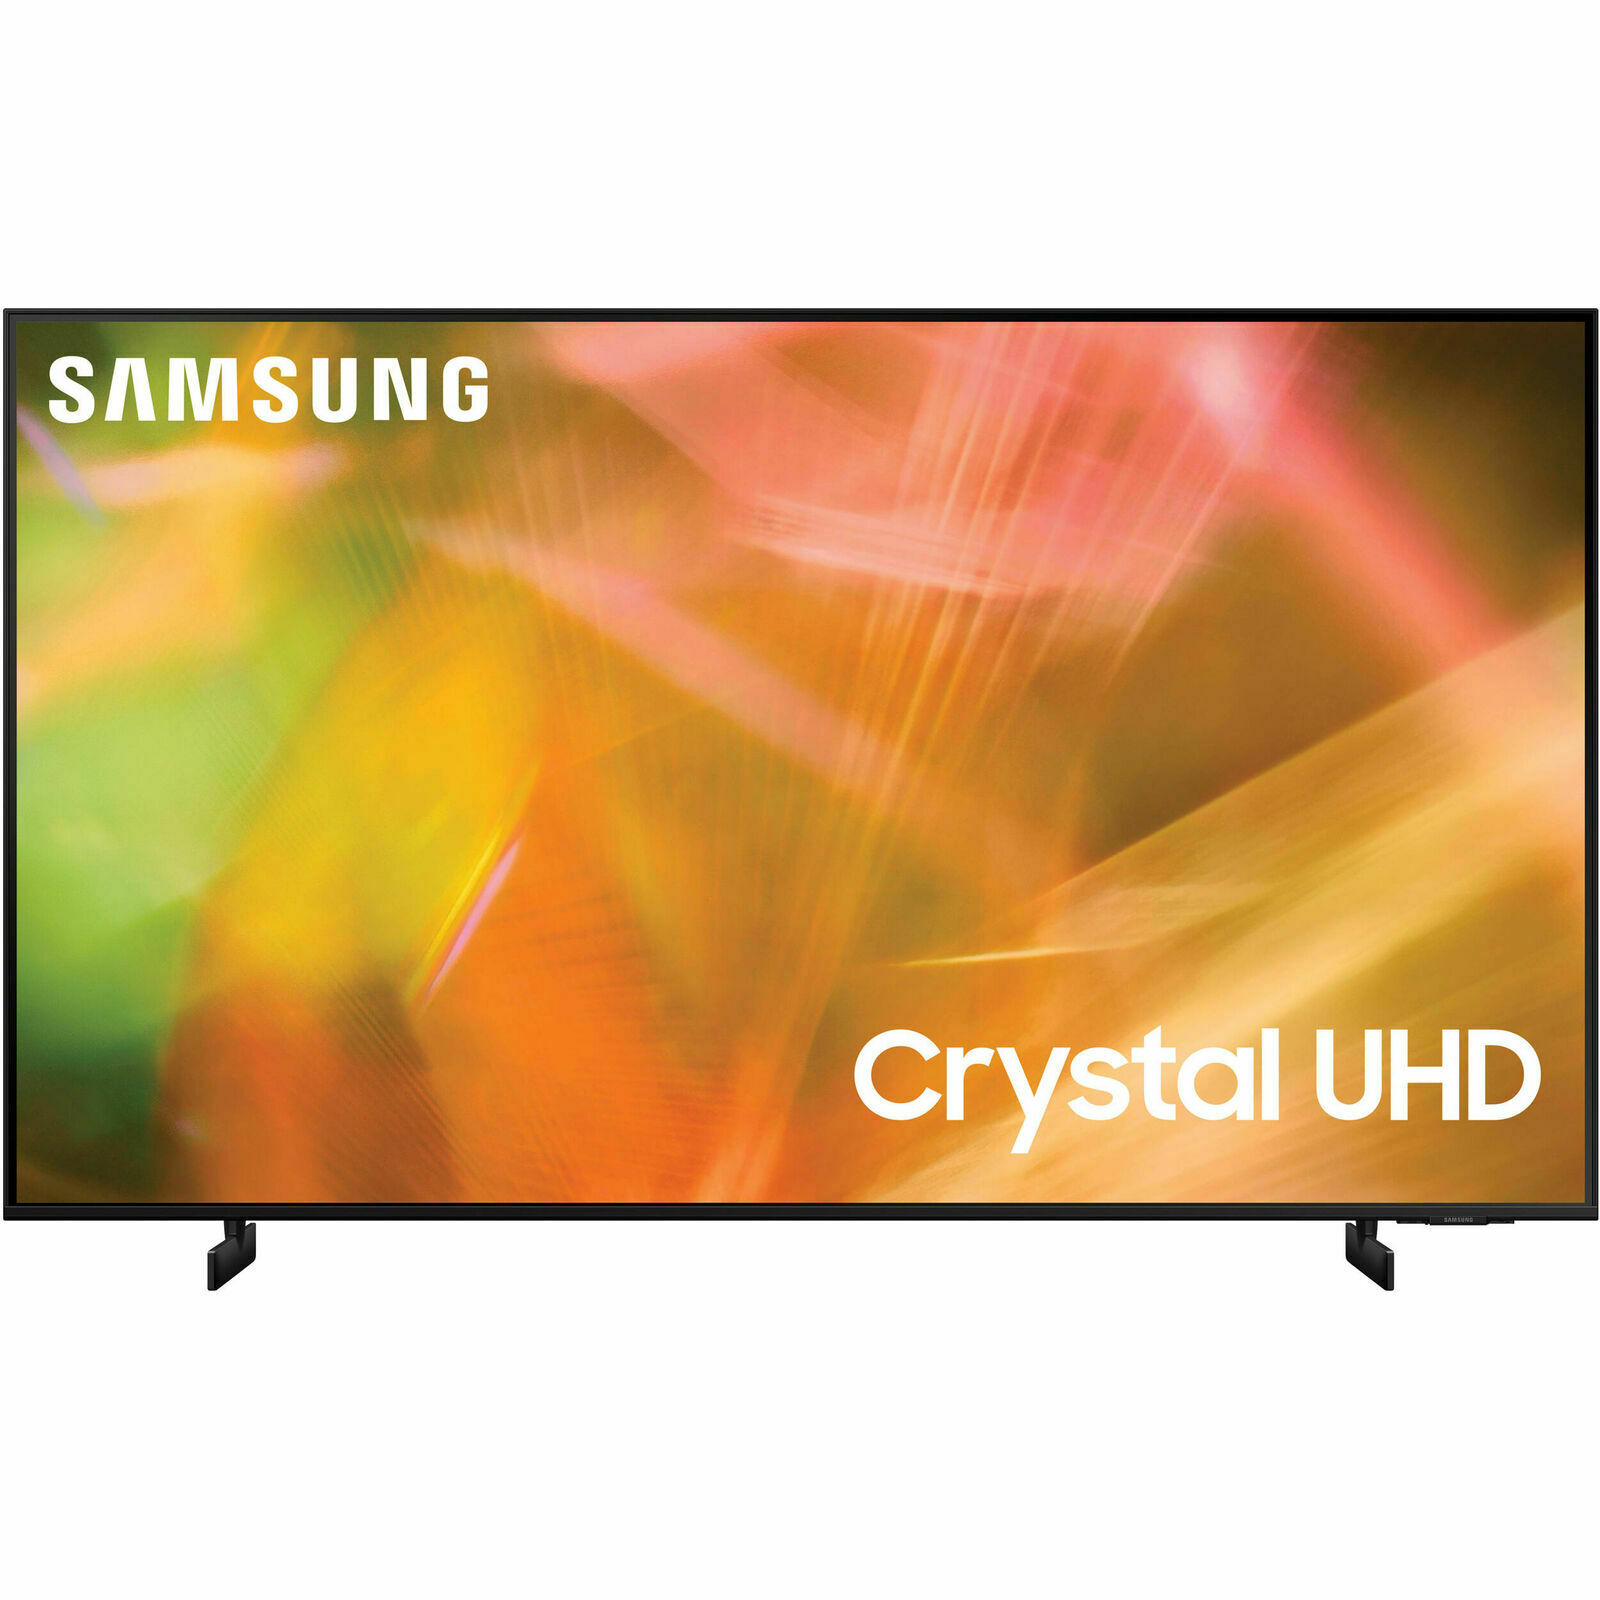 Samsung 55" AU8000 4K Crystal UHD HDR Smart TV - 3 HDMI (2021)